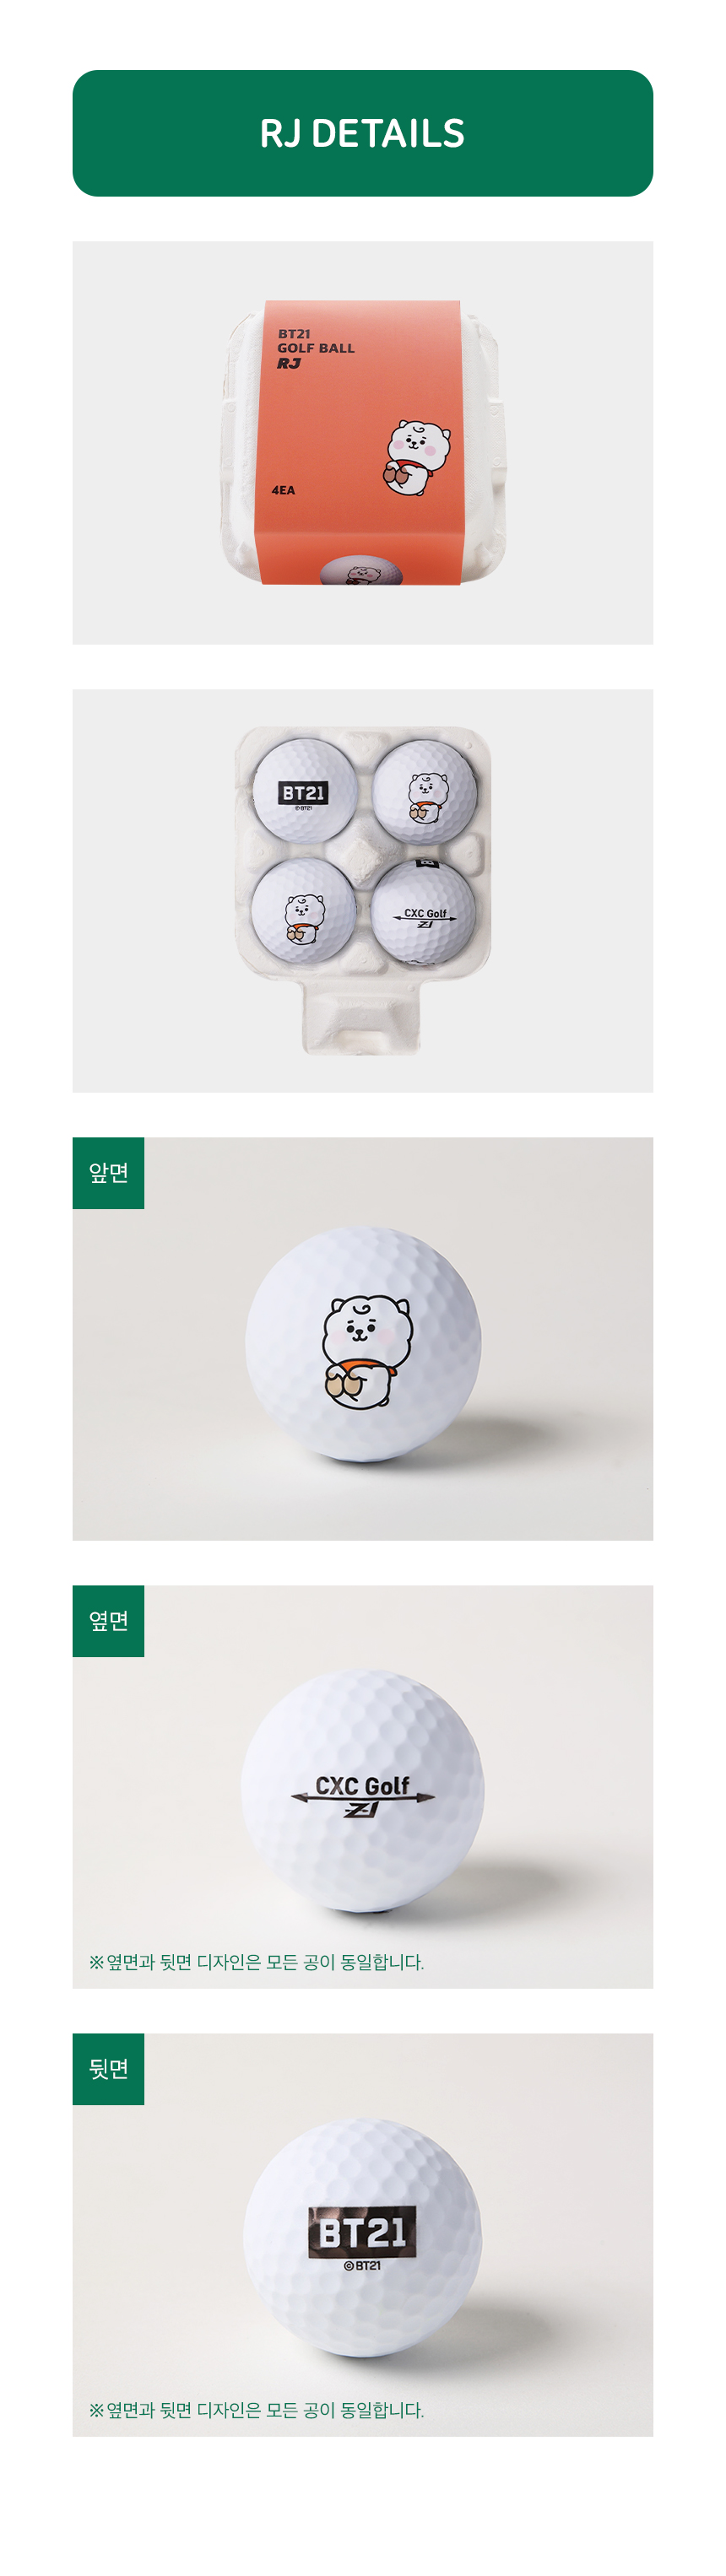 baby_golf_ball_4ea_detail_rj.jpg